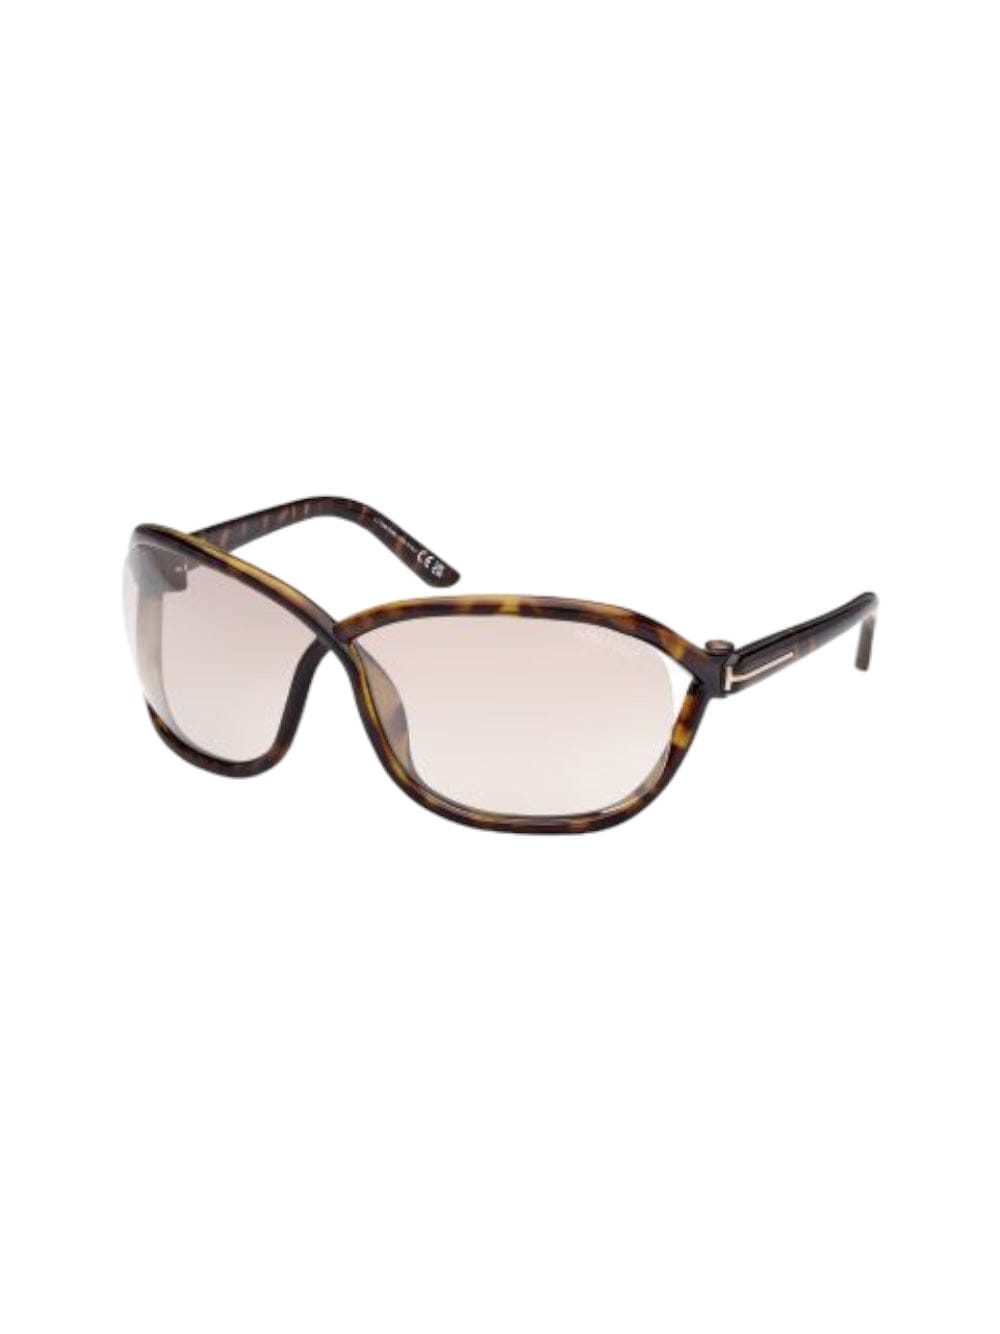 Tom Ford Fernanda Sunglasses In Dark Havana/brown Mirrored Solid